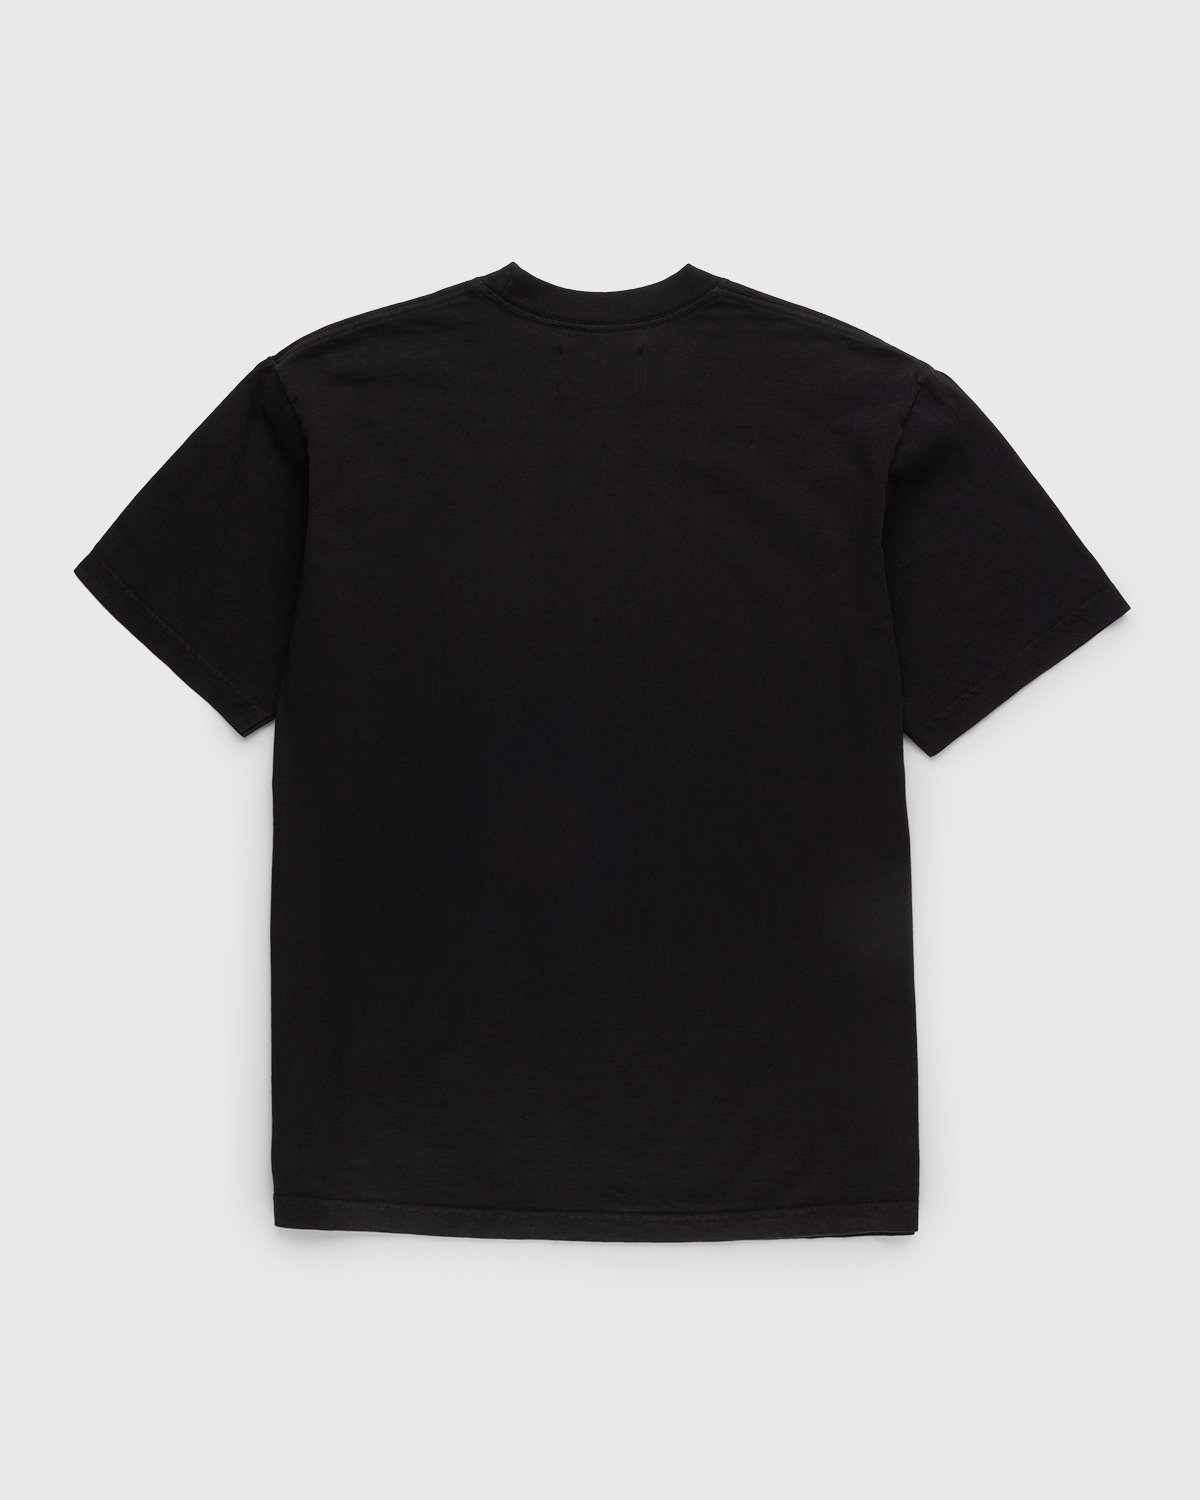 Polite Worldwide - Lava Lamp T-Shirt Black - Clothing - Black - Image 2